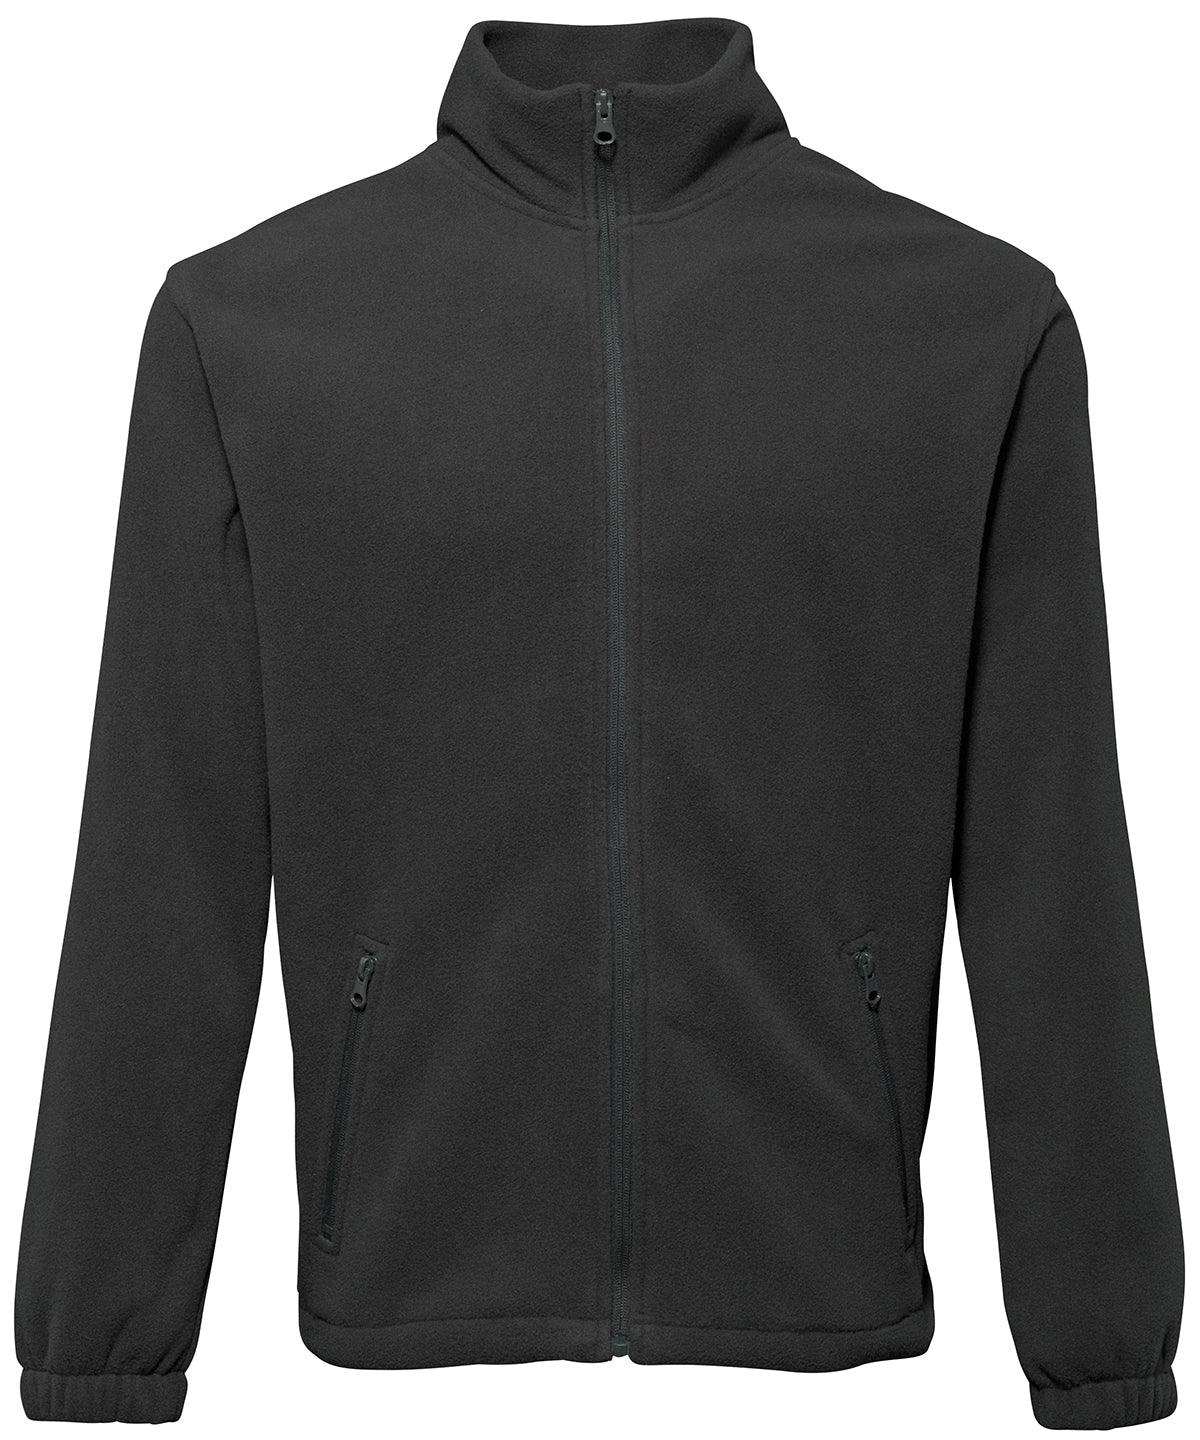 Black - Full-zip fleece Jackets 2786 Jackets & Coats, Jackets - Fleece, Must Haves, Plus Sizes, Rebrandable, Workwear Schoolwear Centres